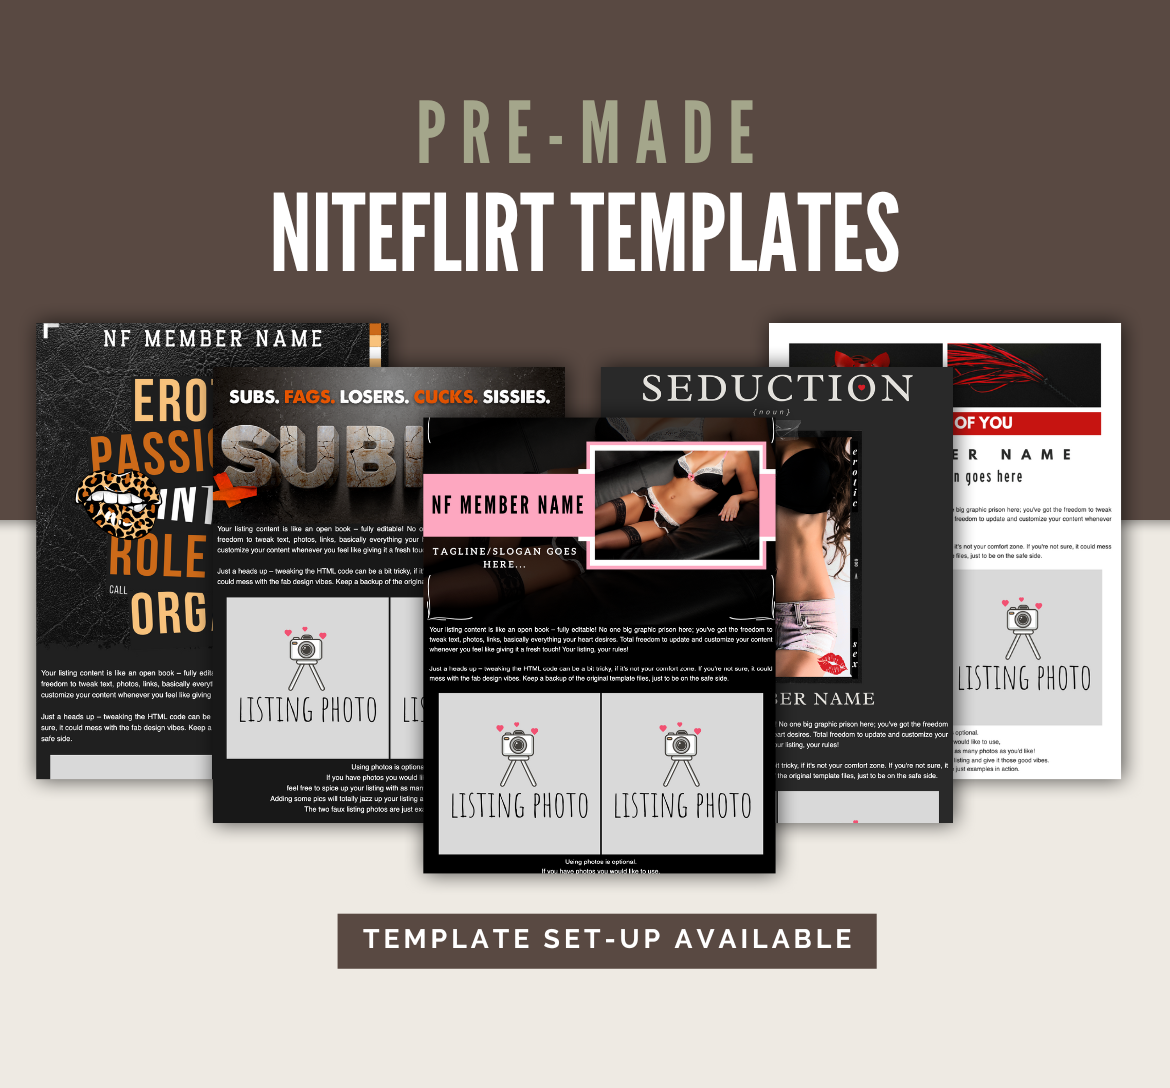 Pre-made Niteflirt Templates